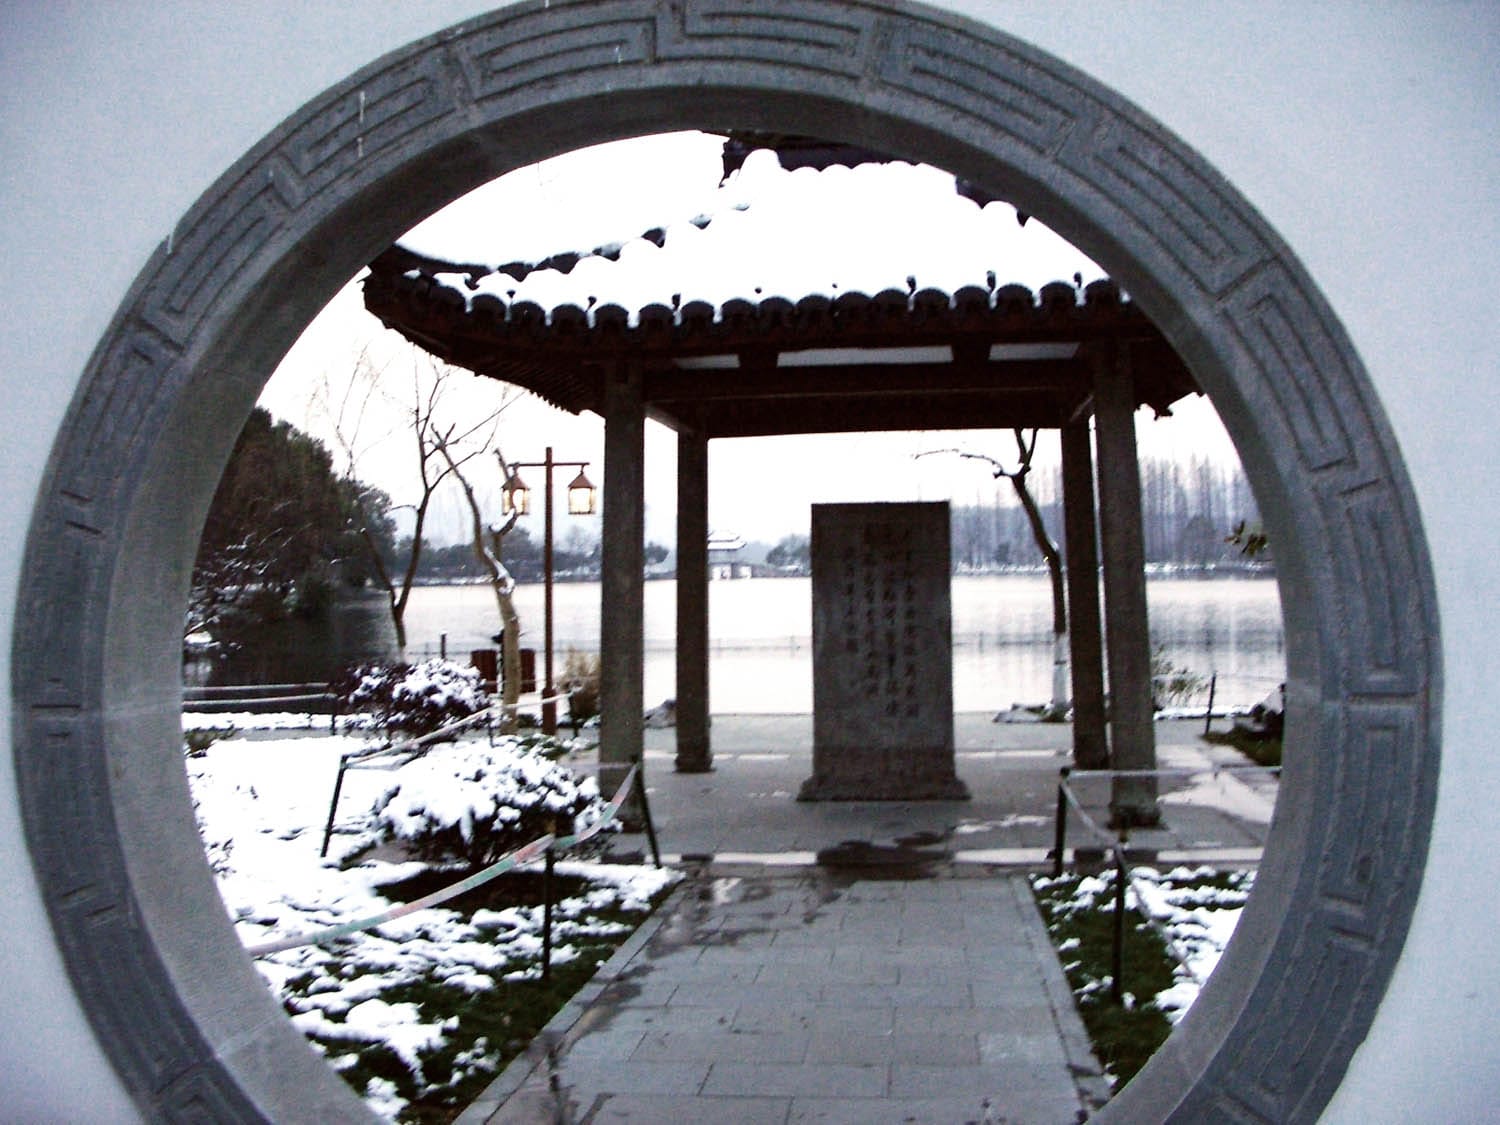 Hangzhou West Lake Park NW